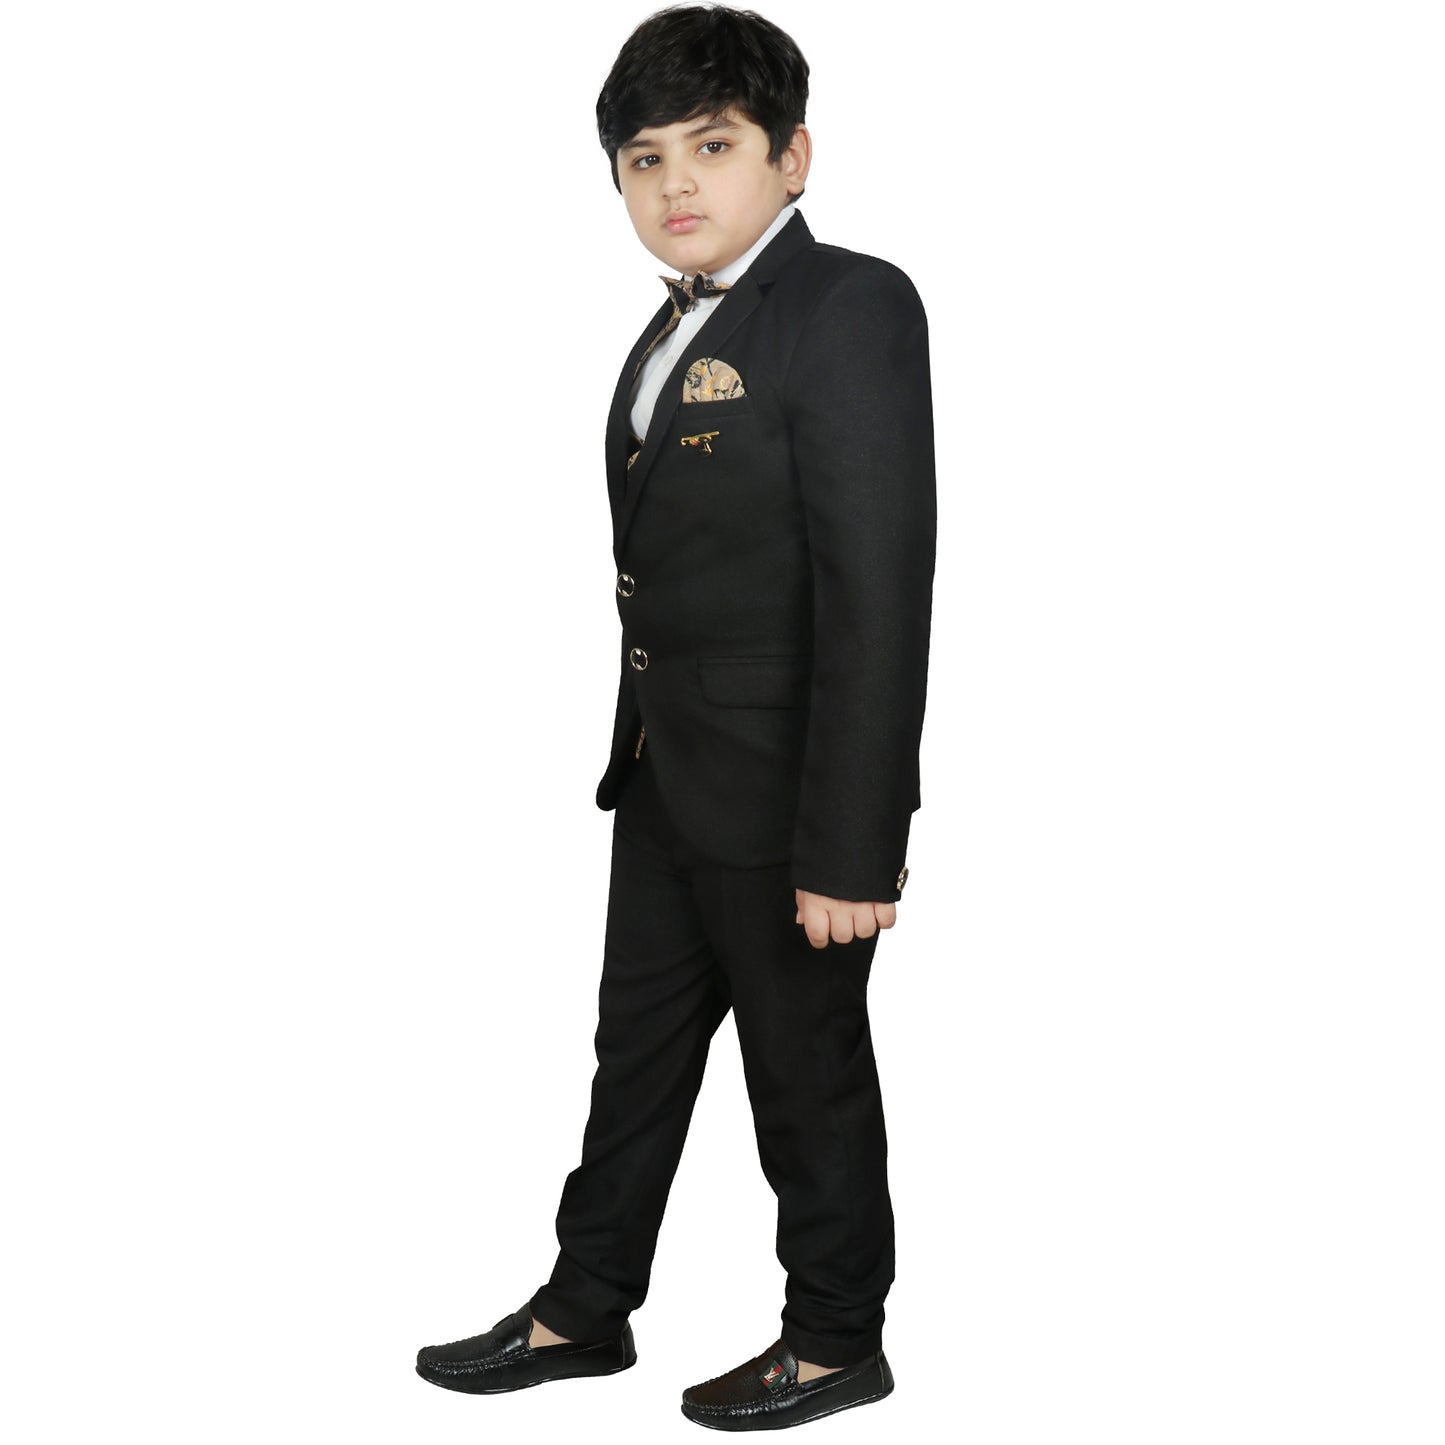 SG YUVRAJ Suits & Sets For Boys (TP-1065)